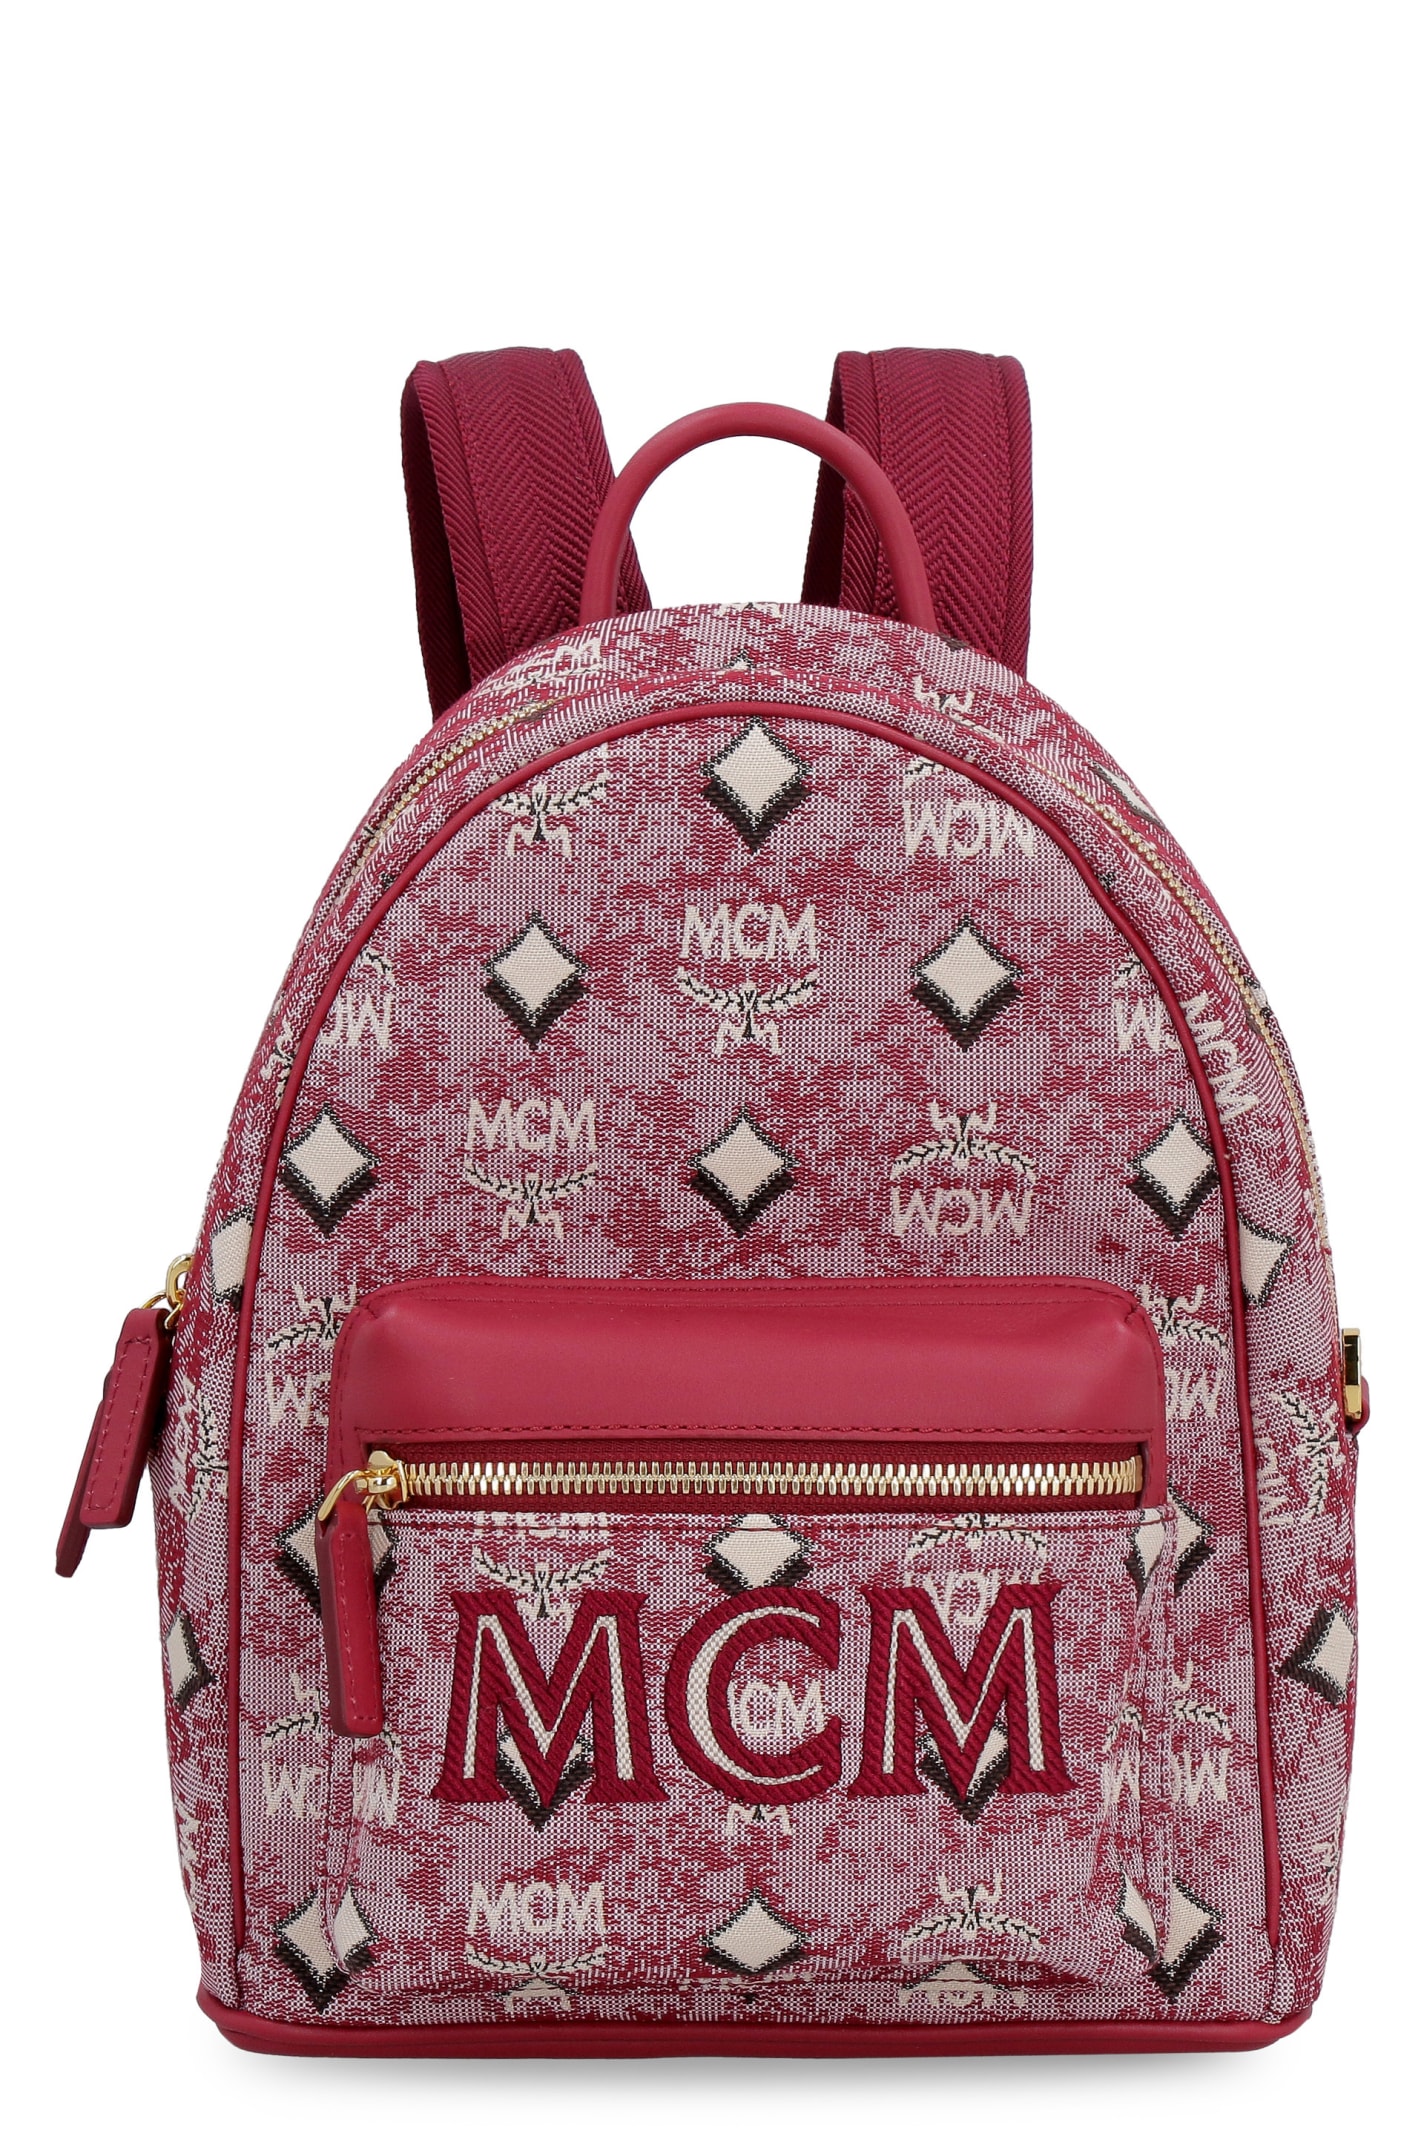 MCM Mini Canvas Backpack